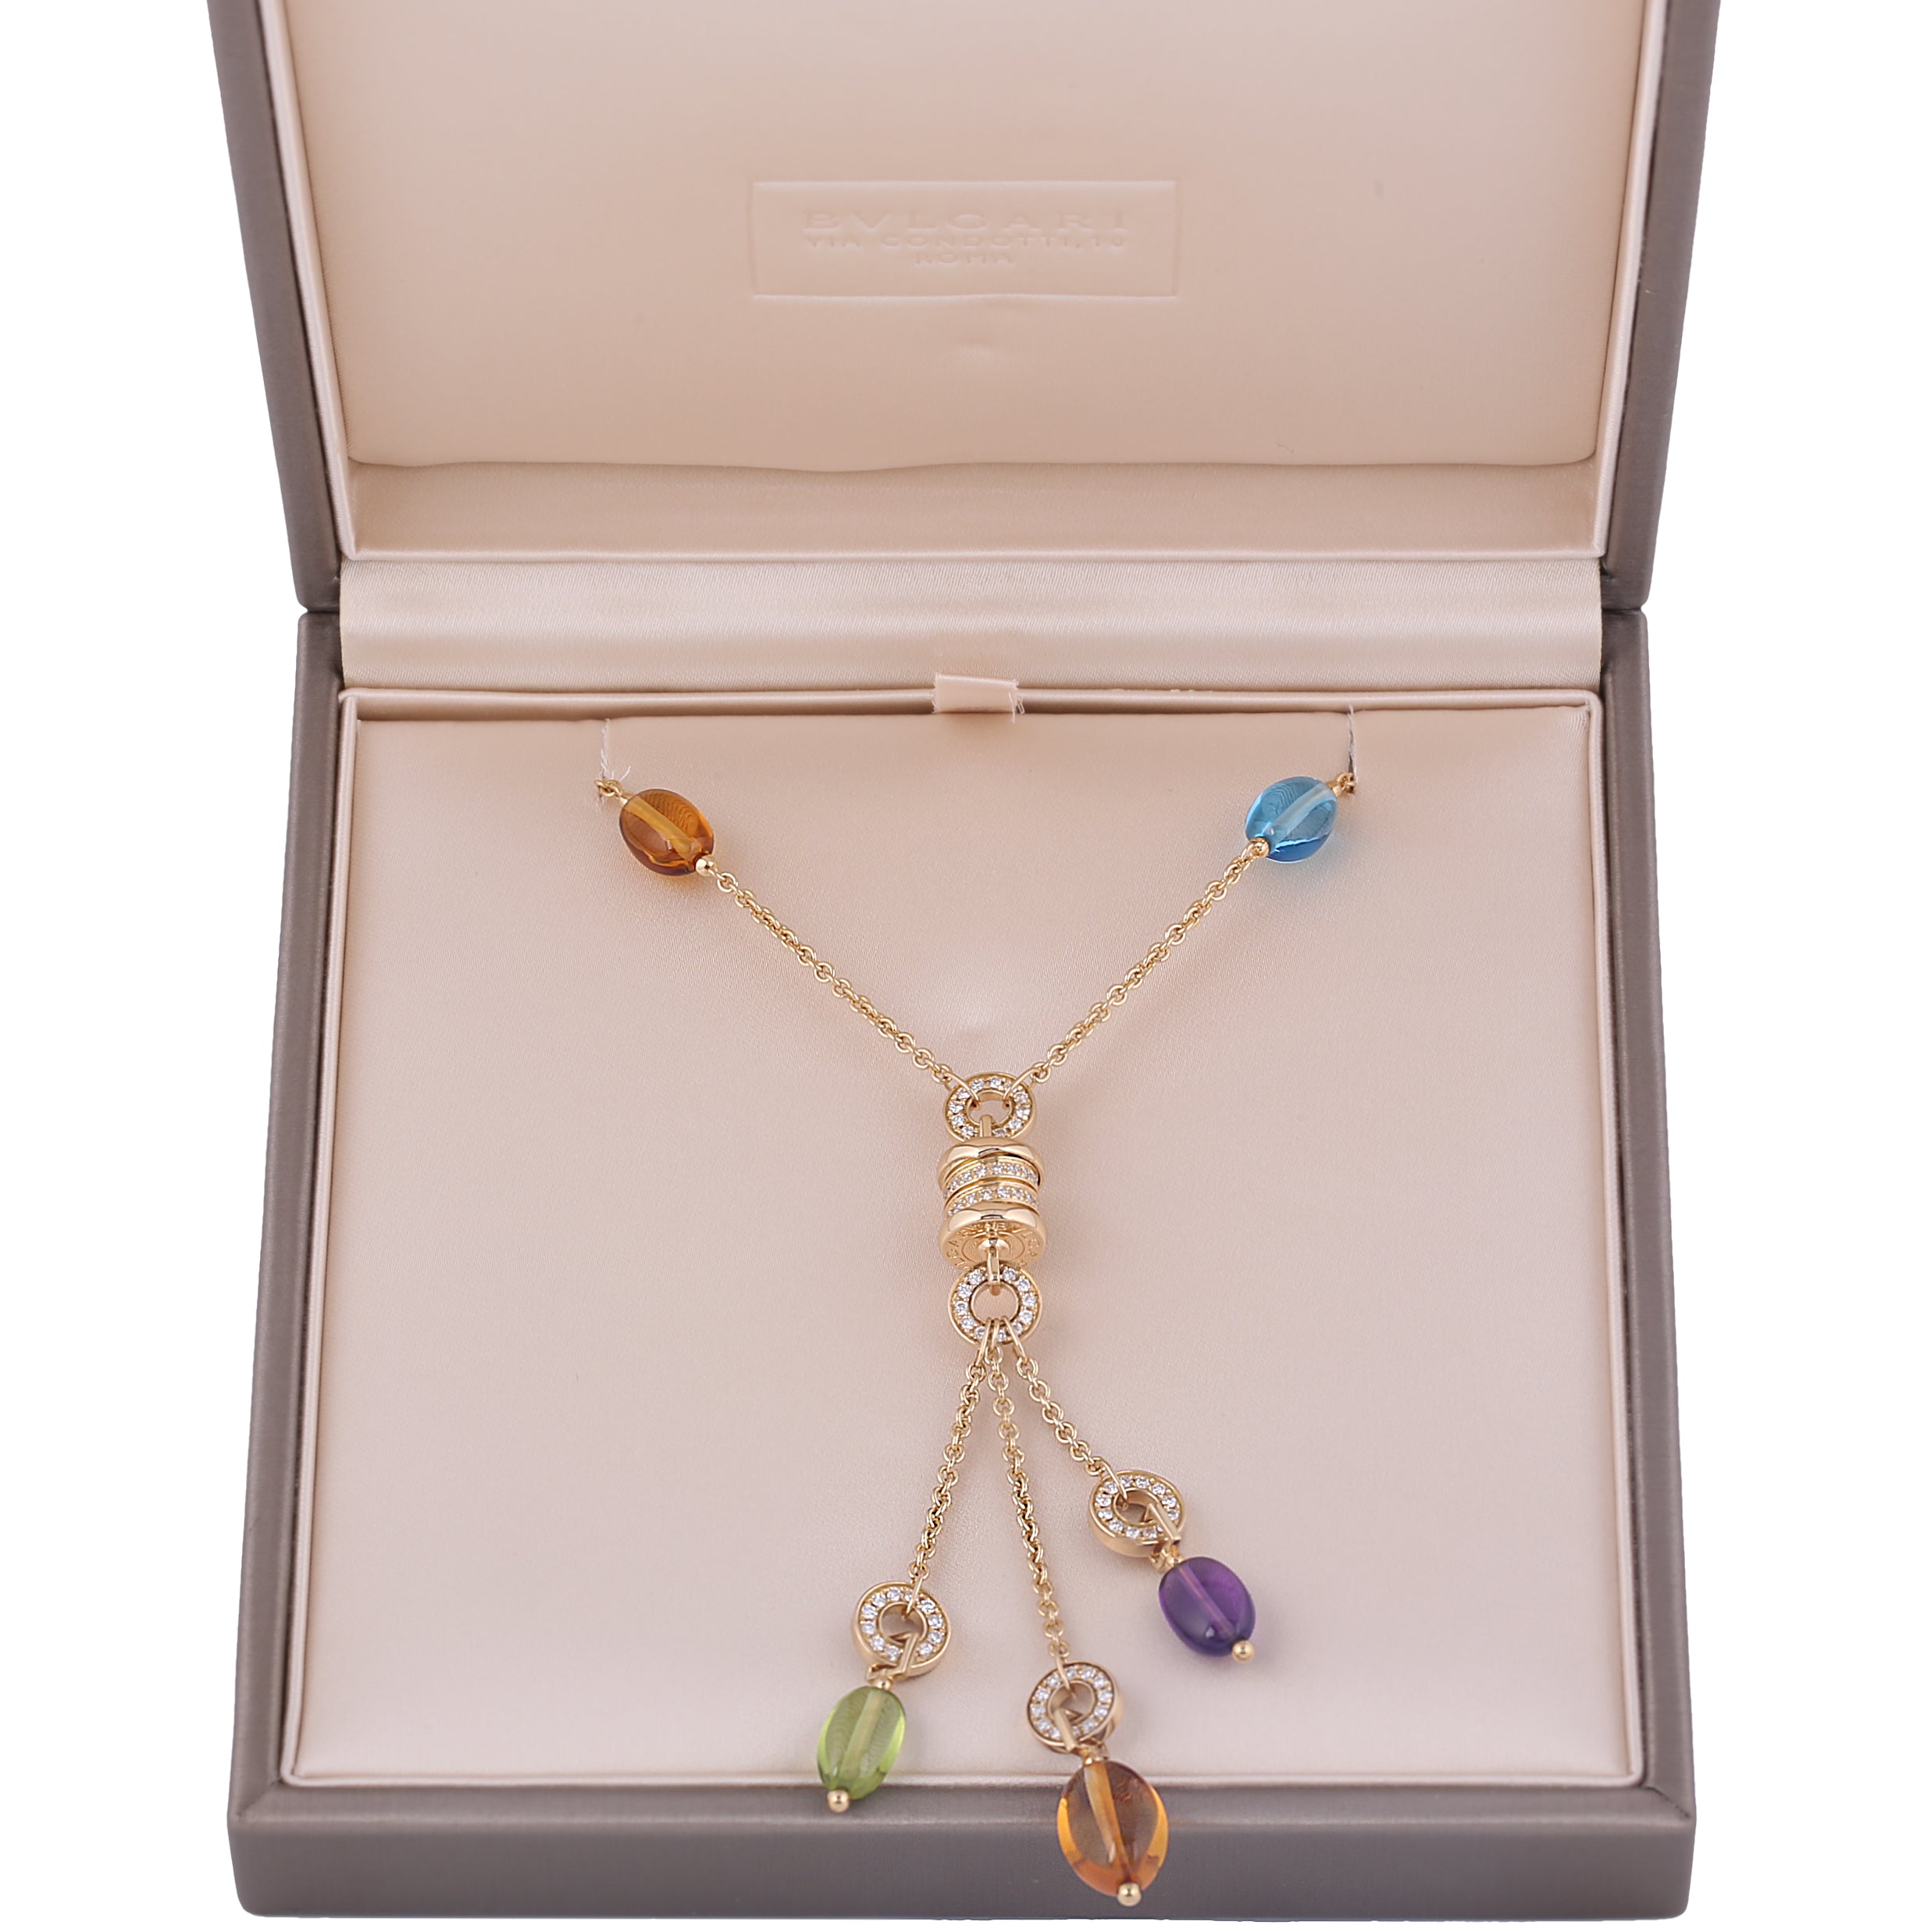 bvlgari necklace colored stones